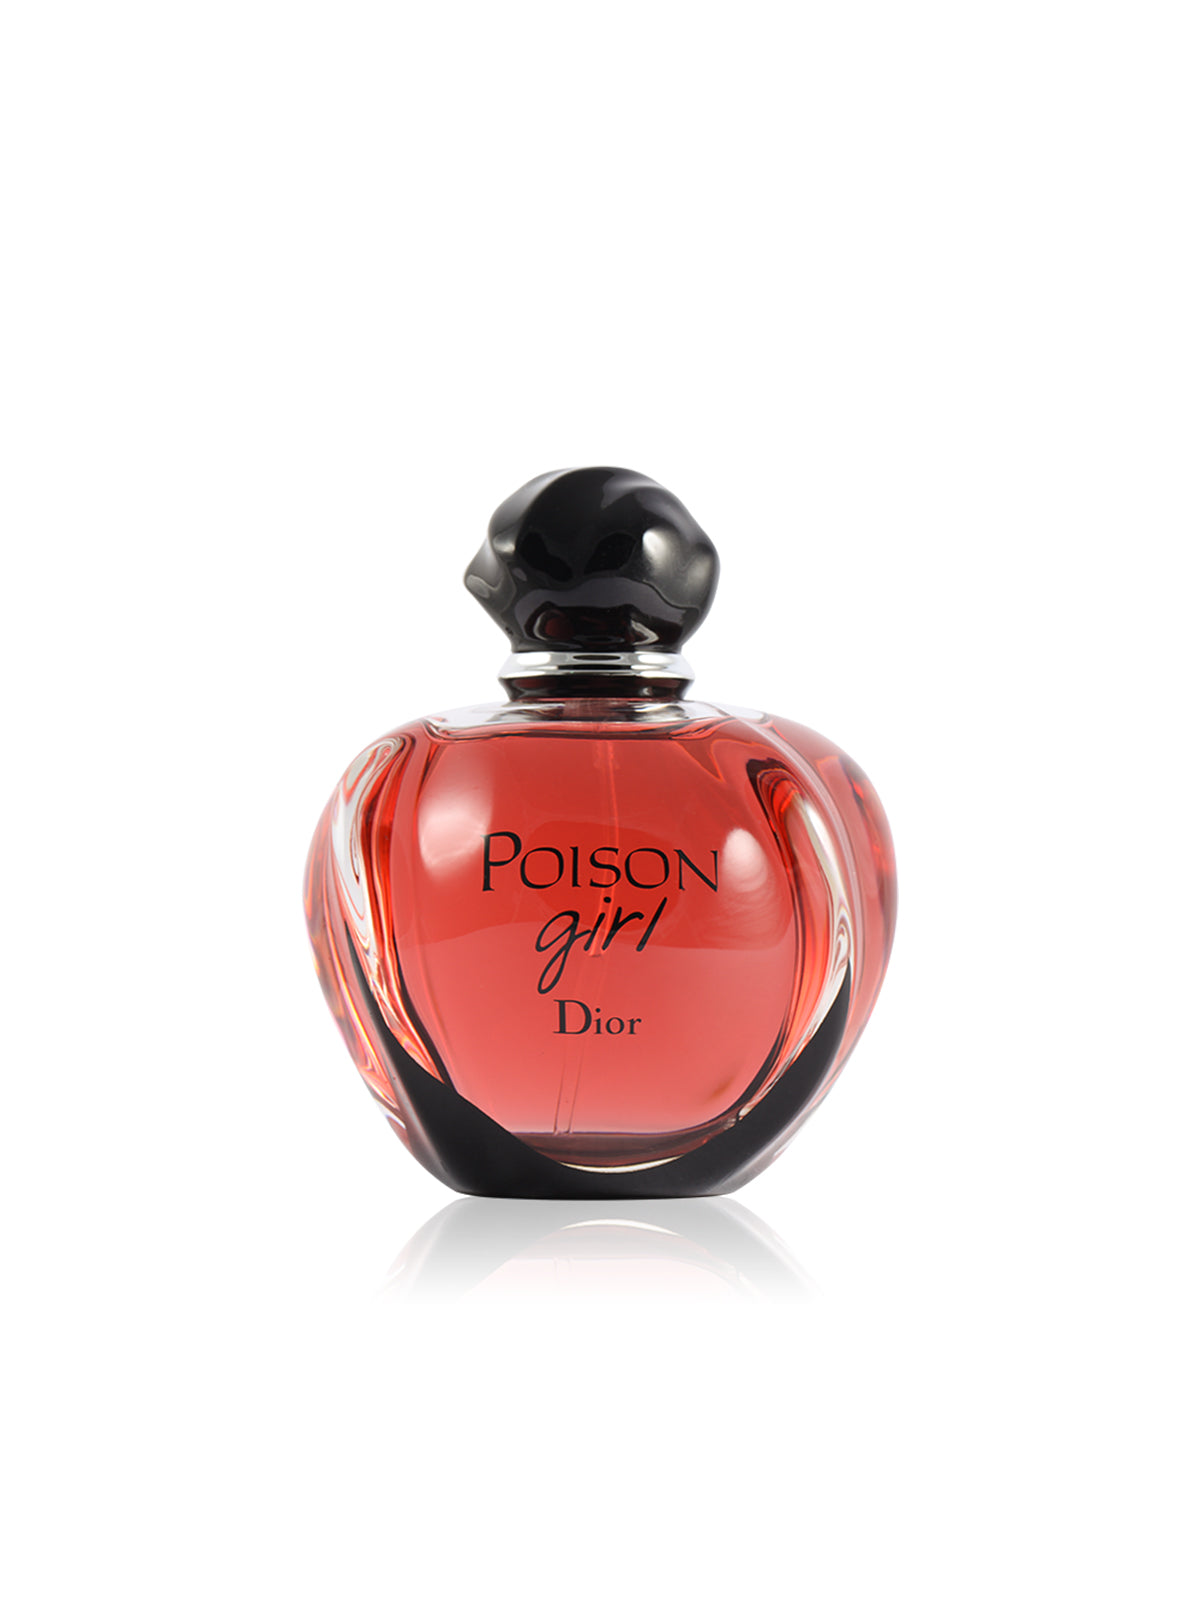 Poison Girl By Dior For Women 3.4 oz Eau De Parfum Spray